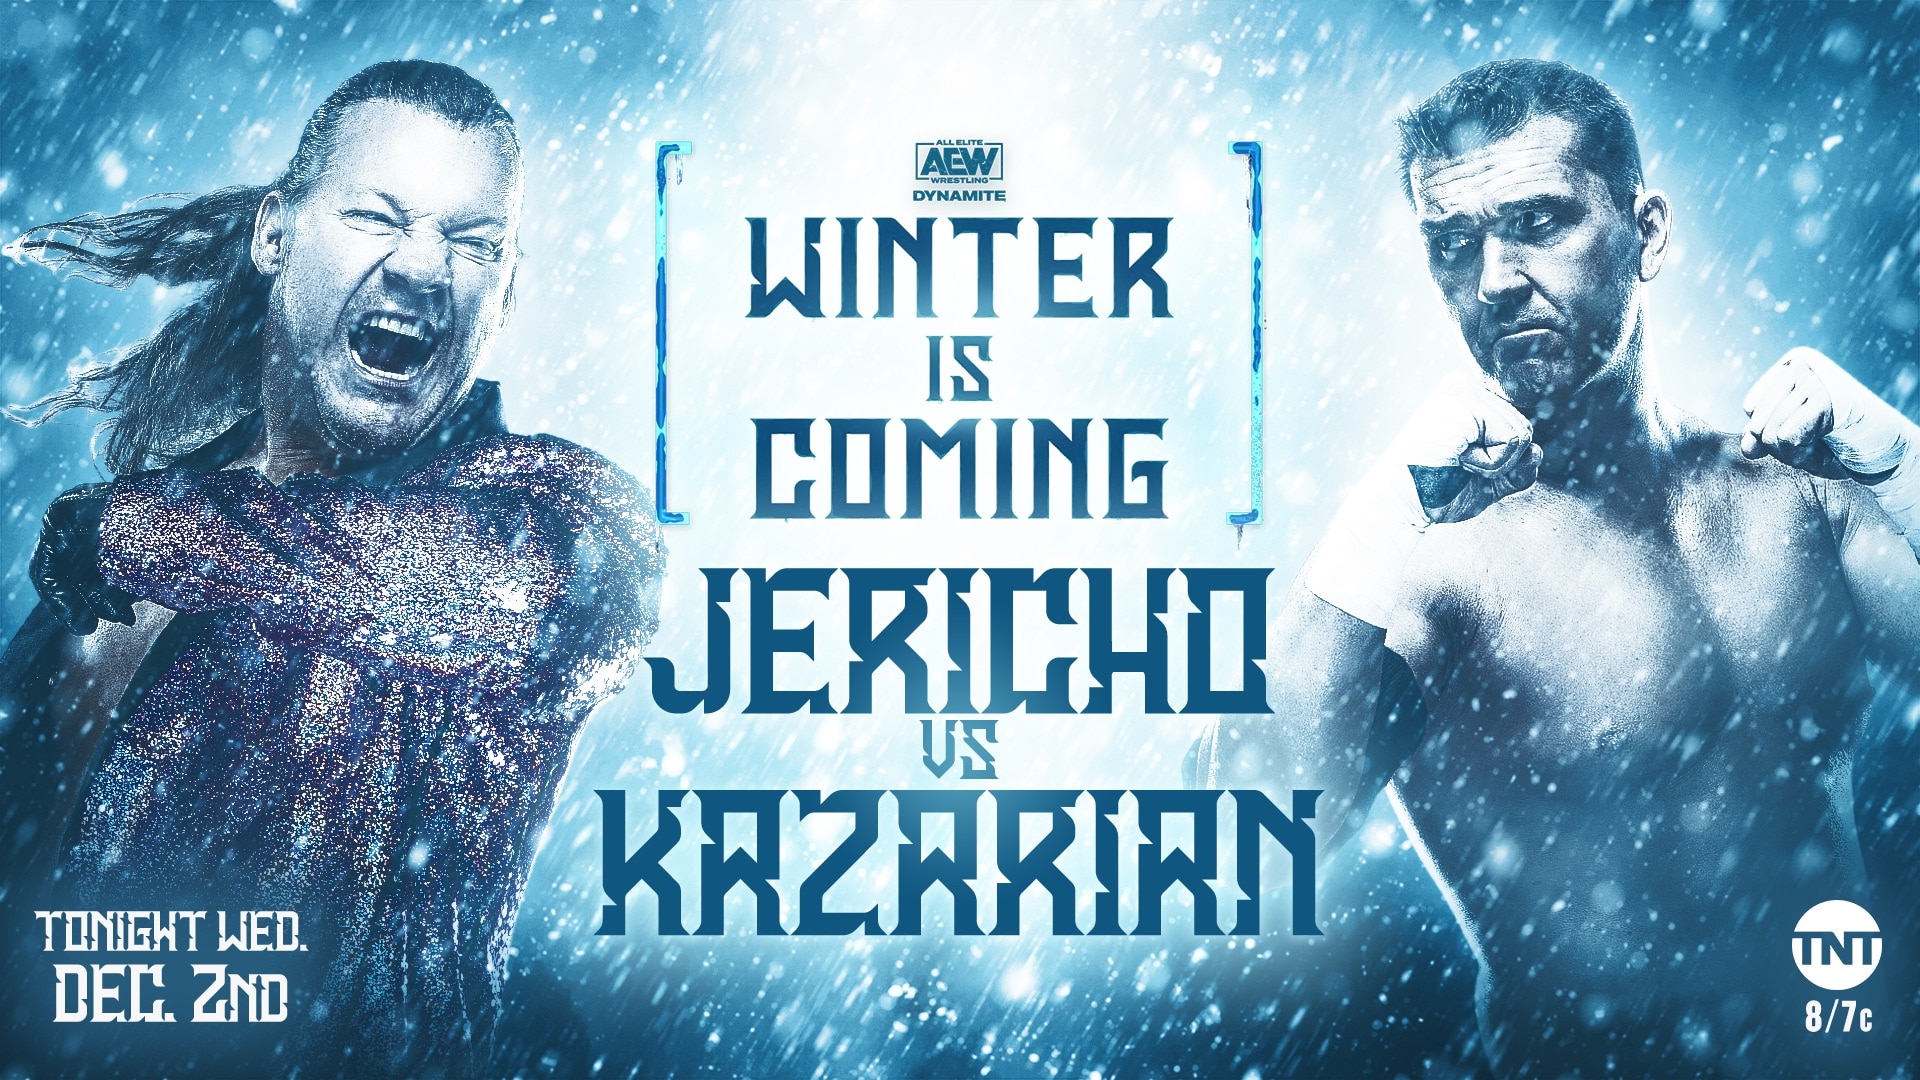 WINTER Jericho vs KAZ.jpg